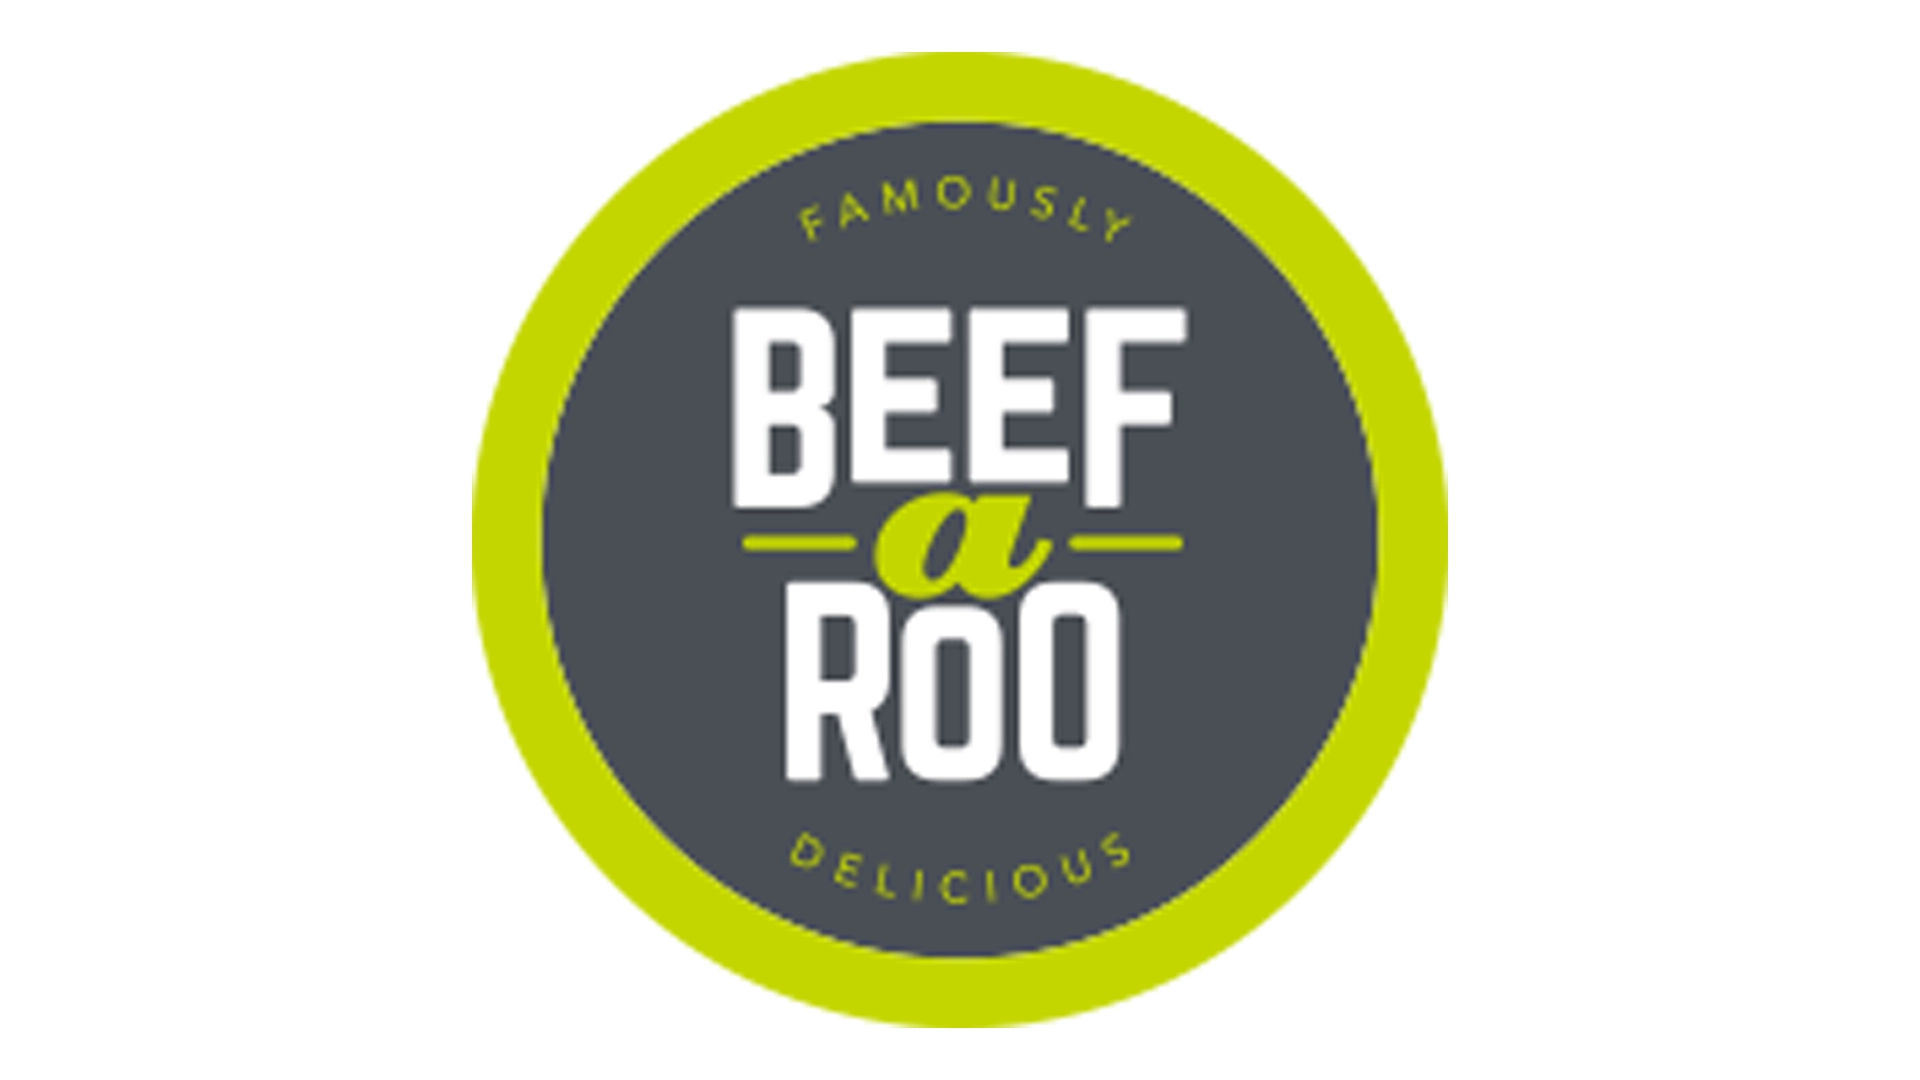 Beef-a-Roo logo